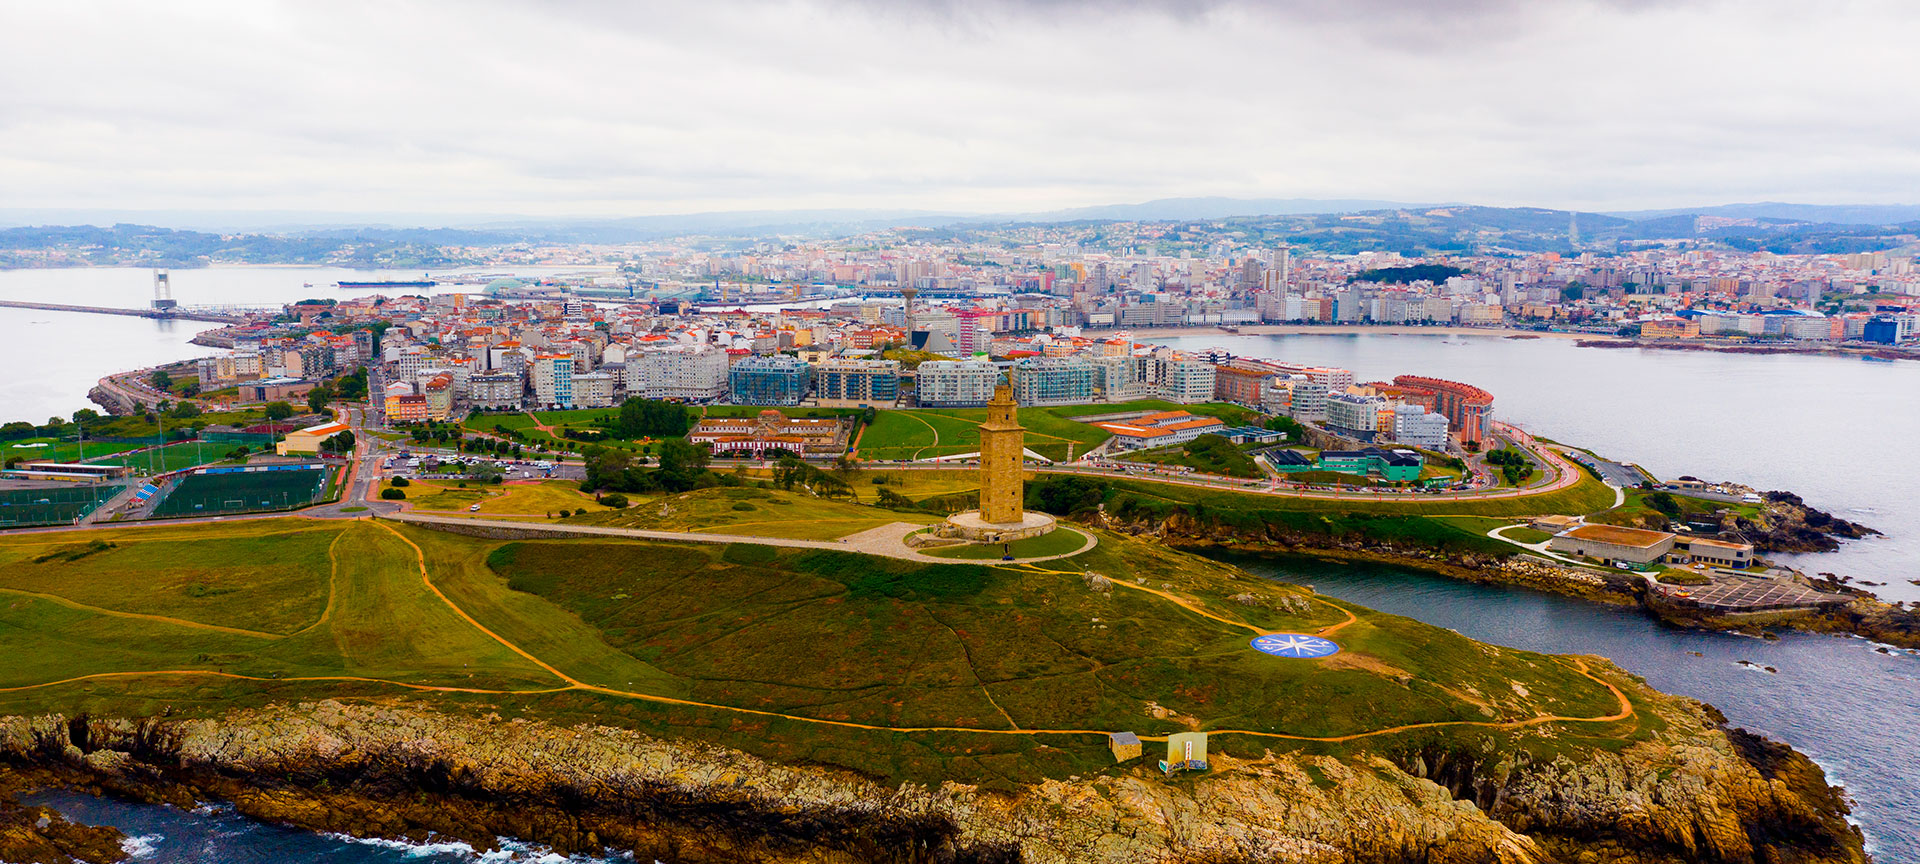 View of A Coruña